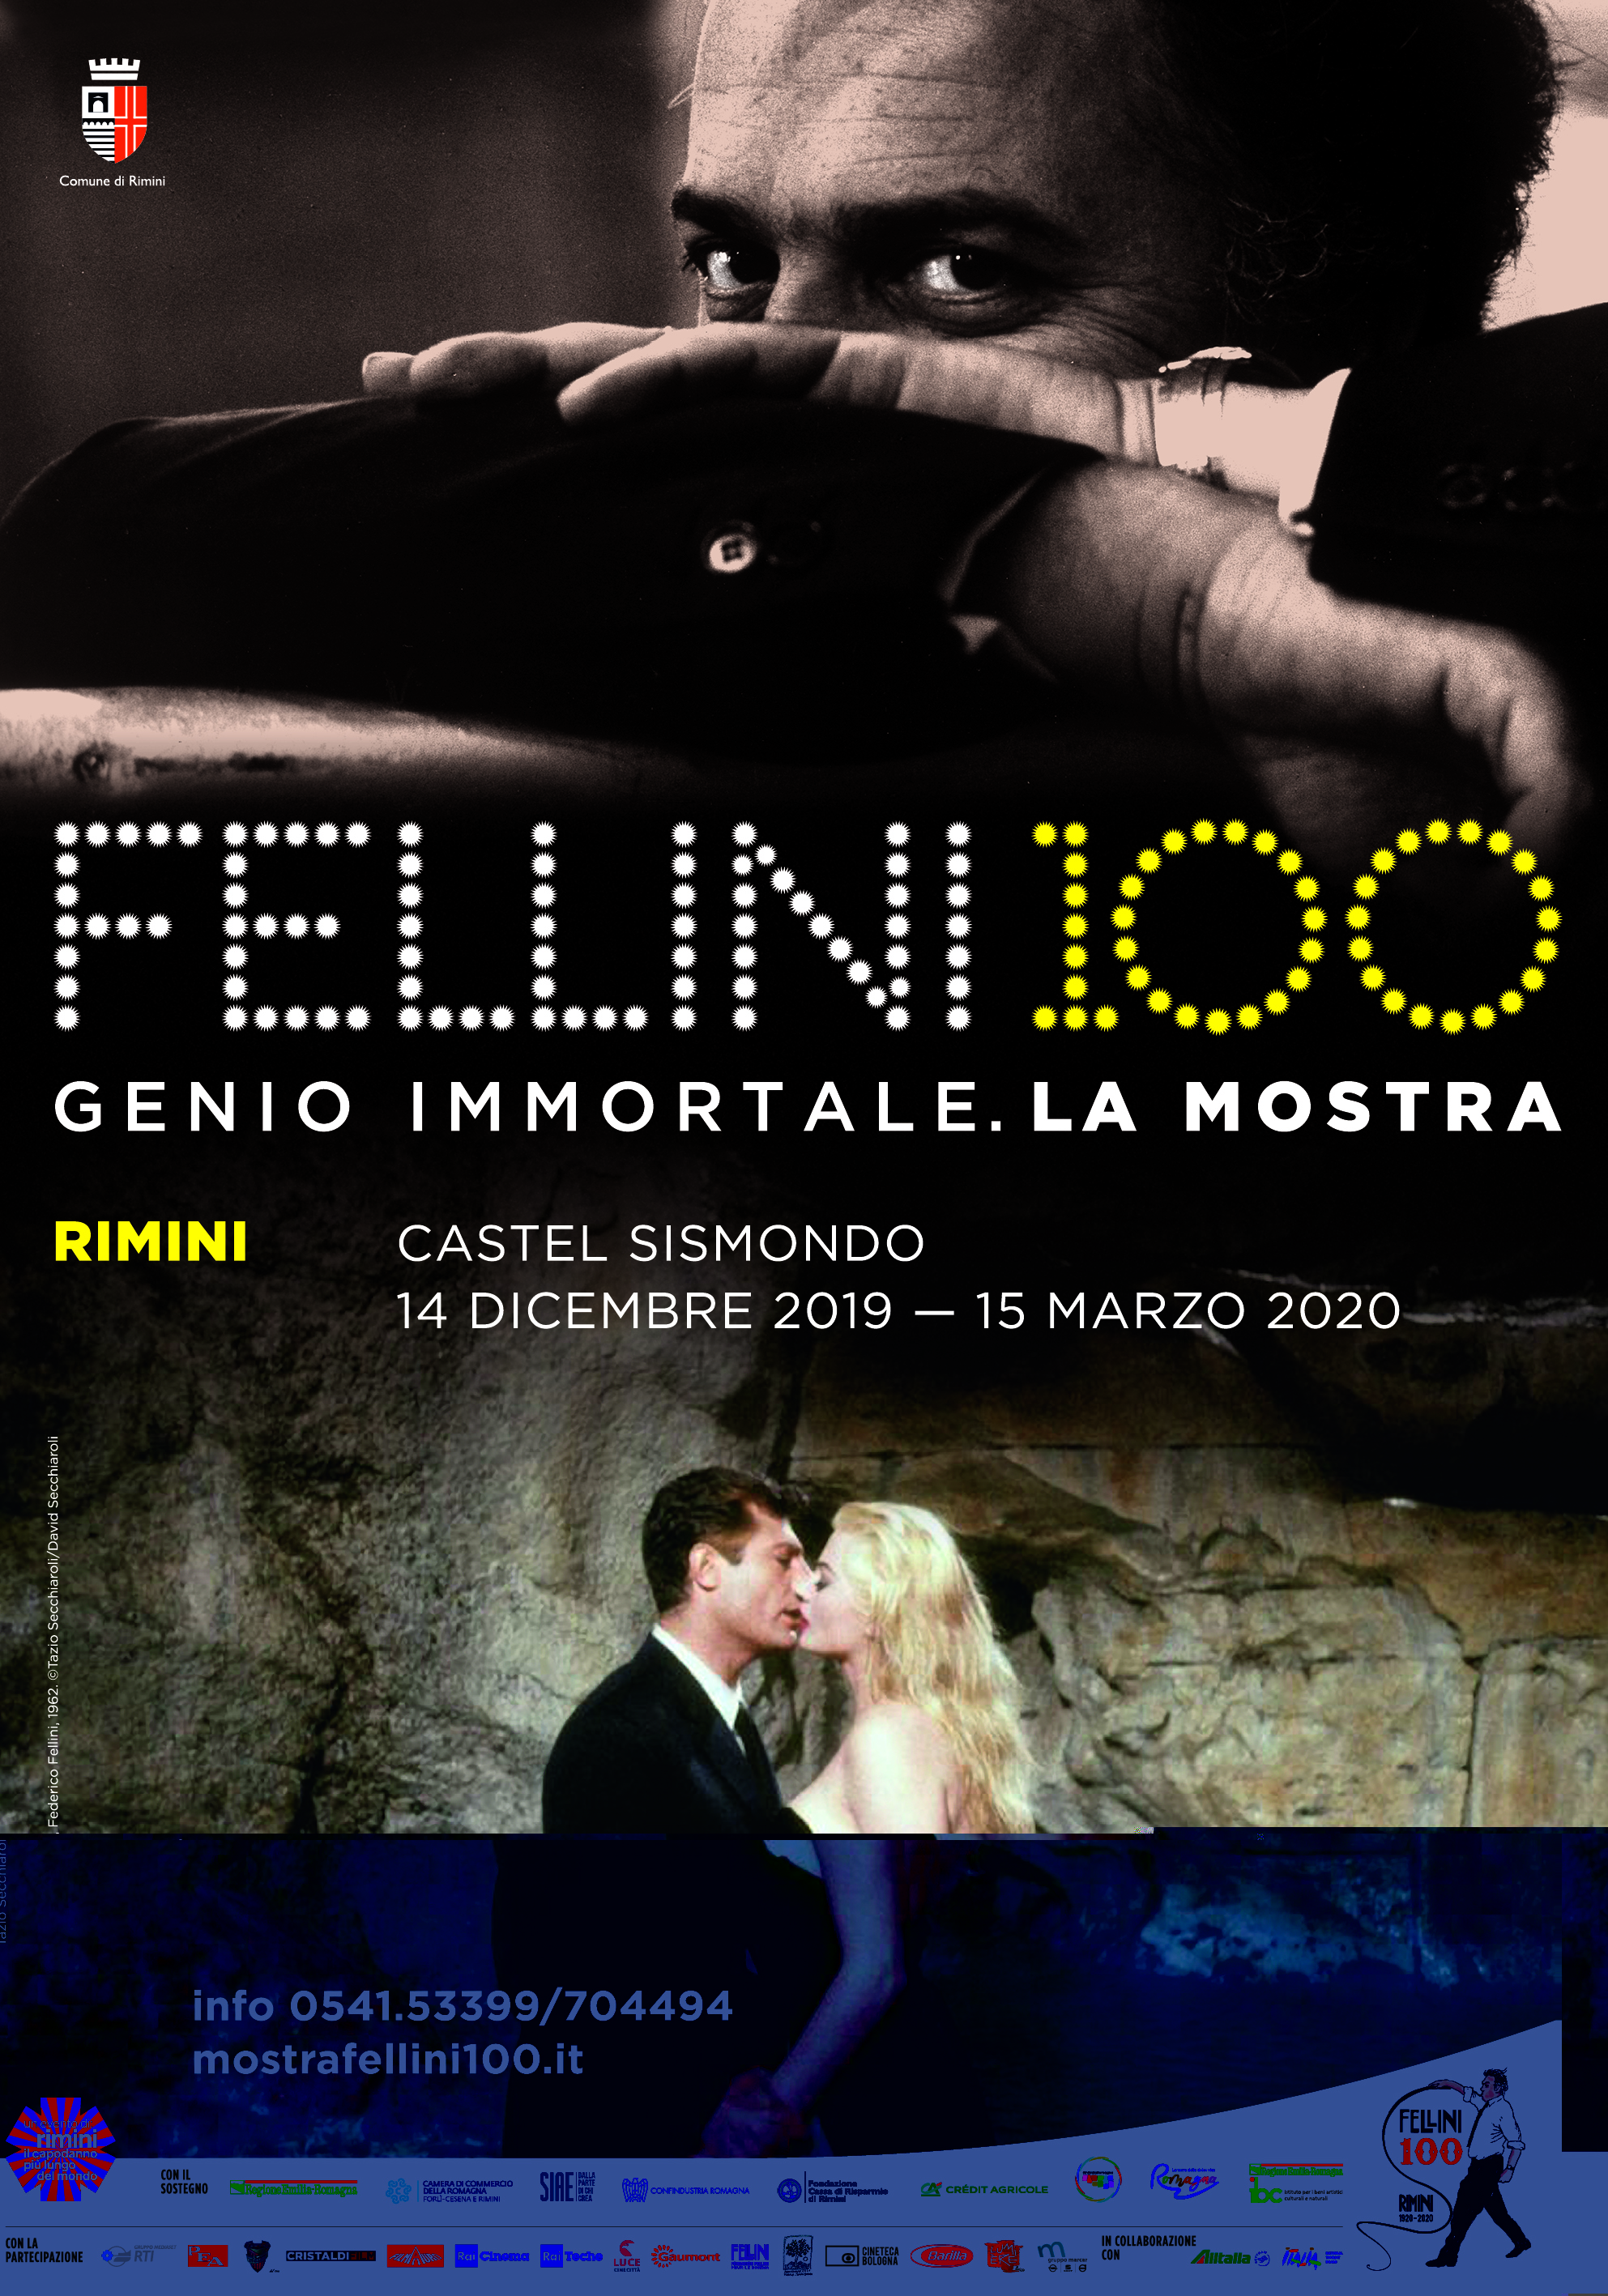 Federico Fellini - Federico Fellini Centennial Tributes Set Globally in 2020 - variety.com - Italy